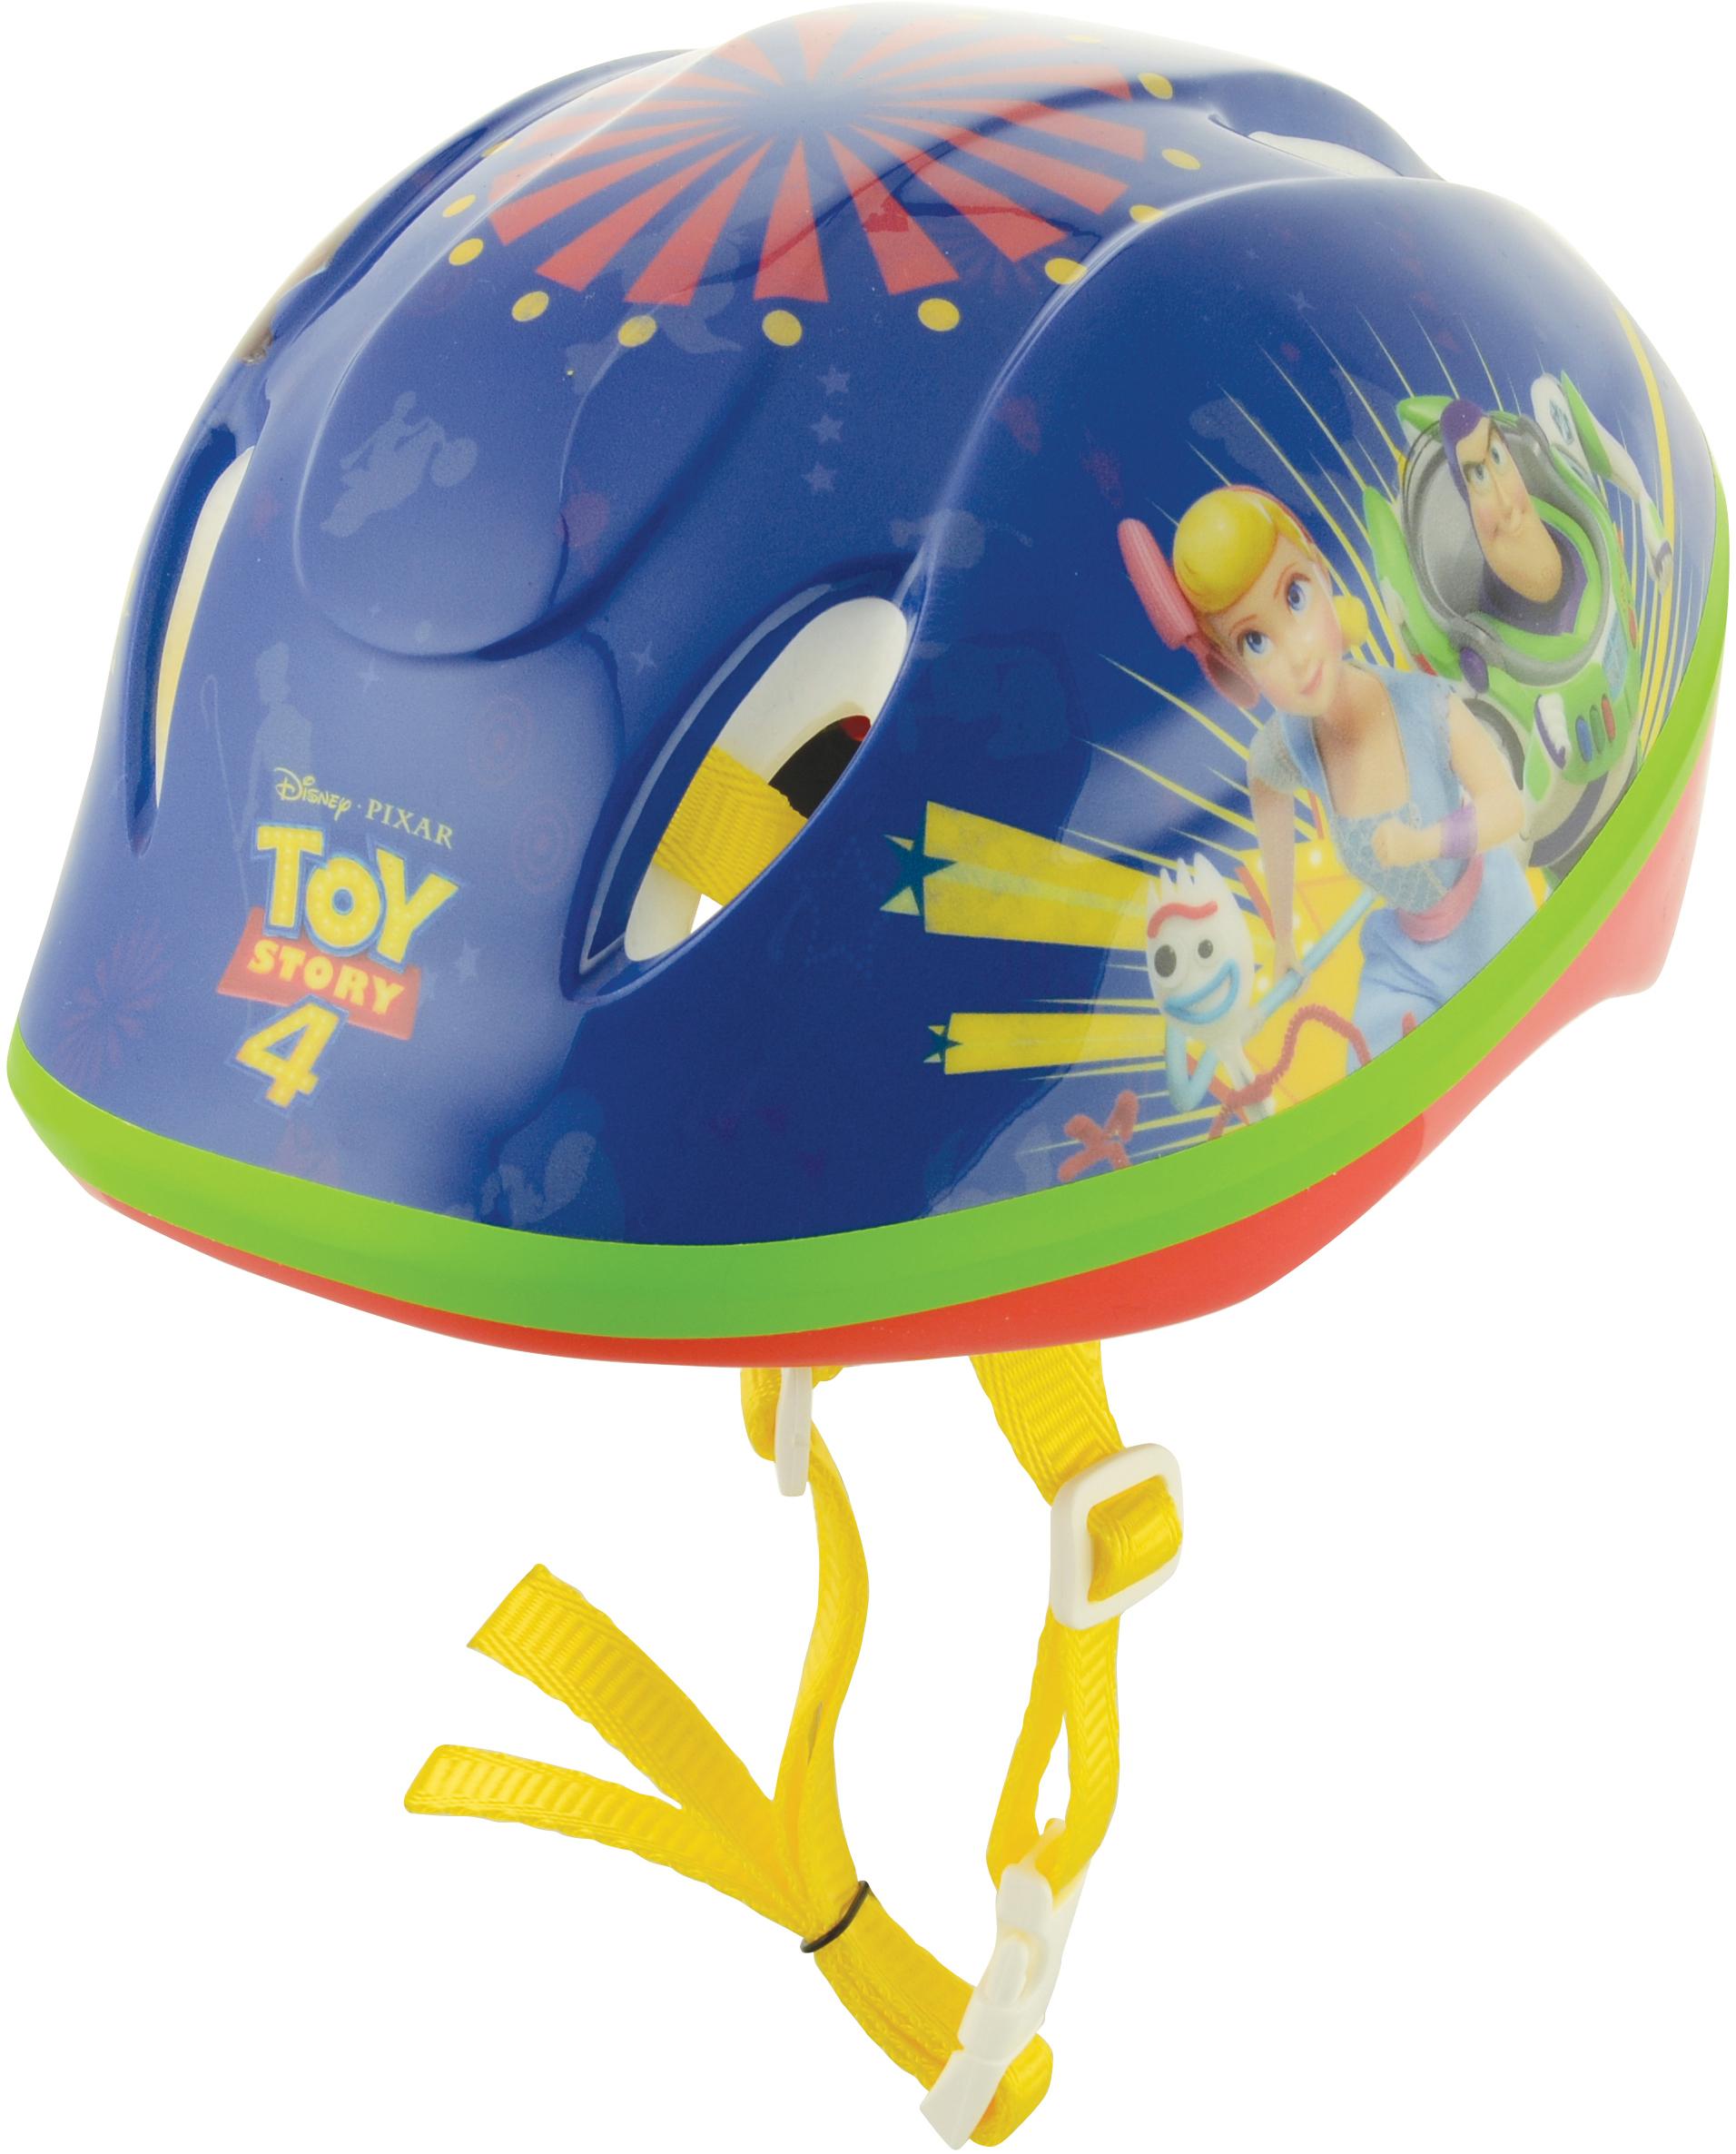 toy story 4 bike helmet